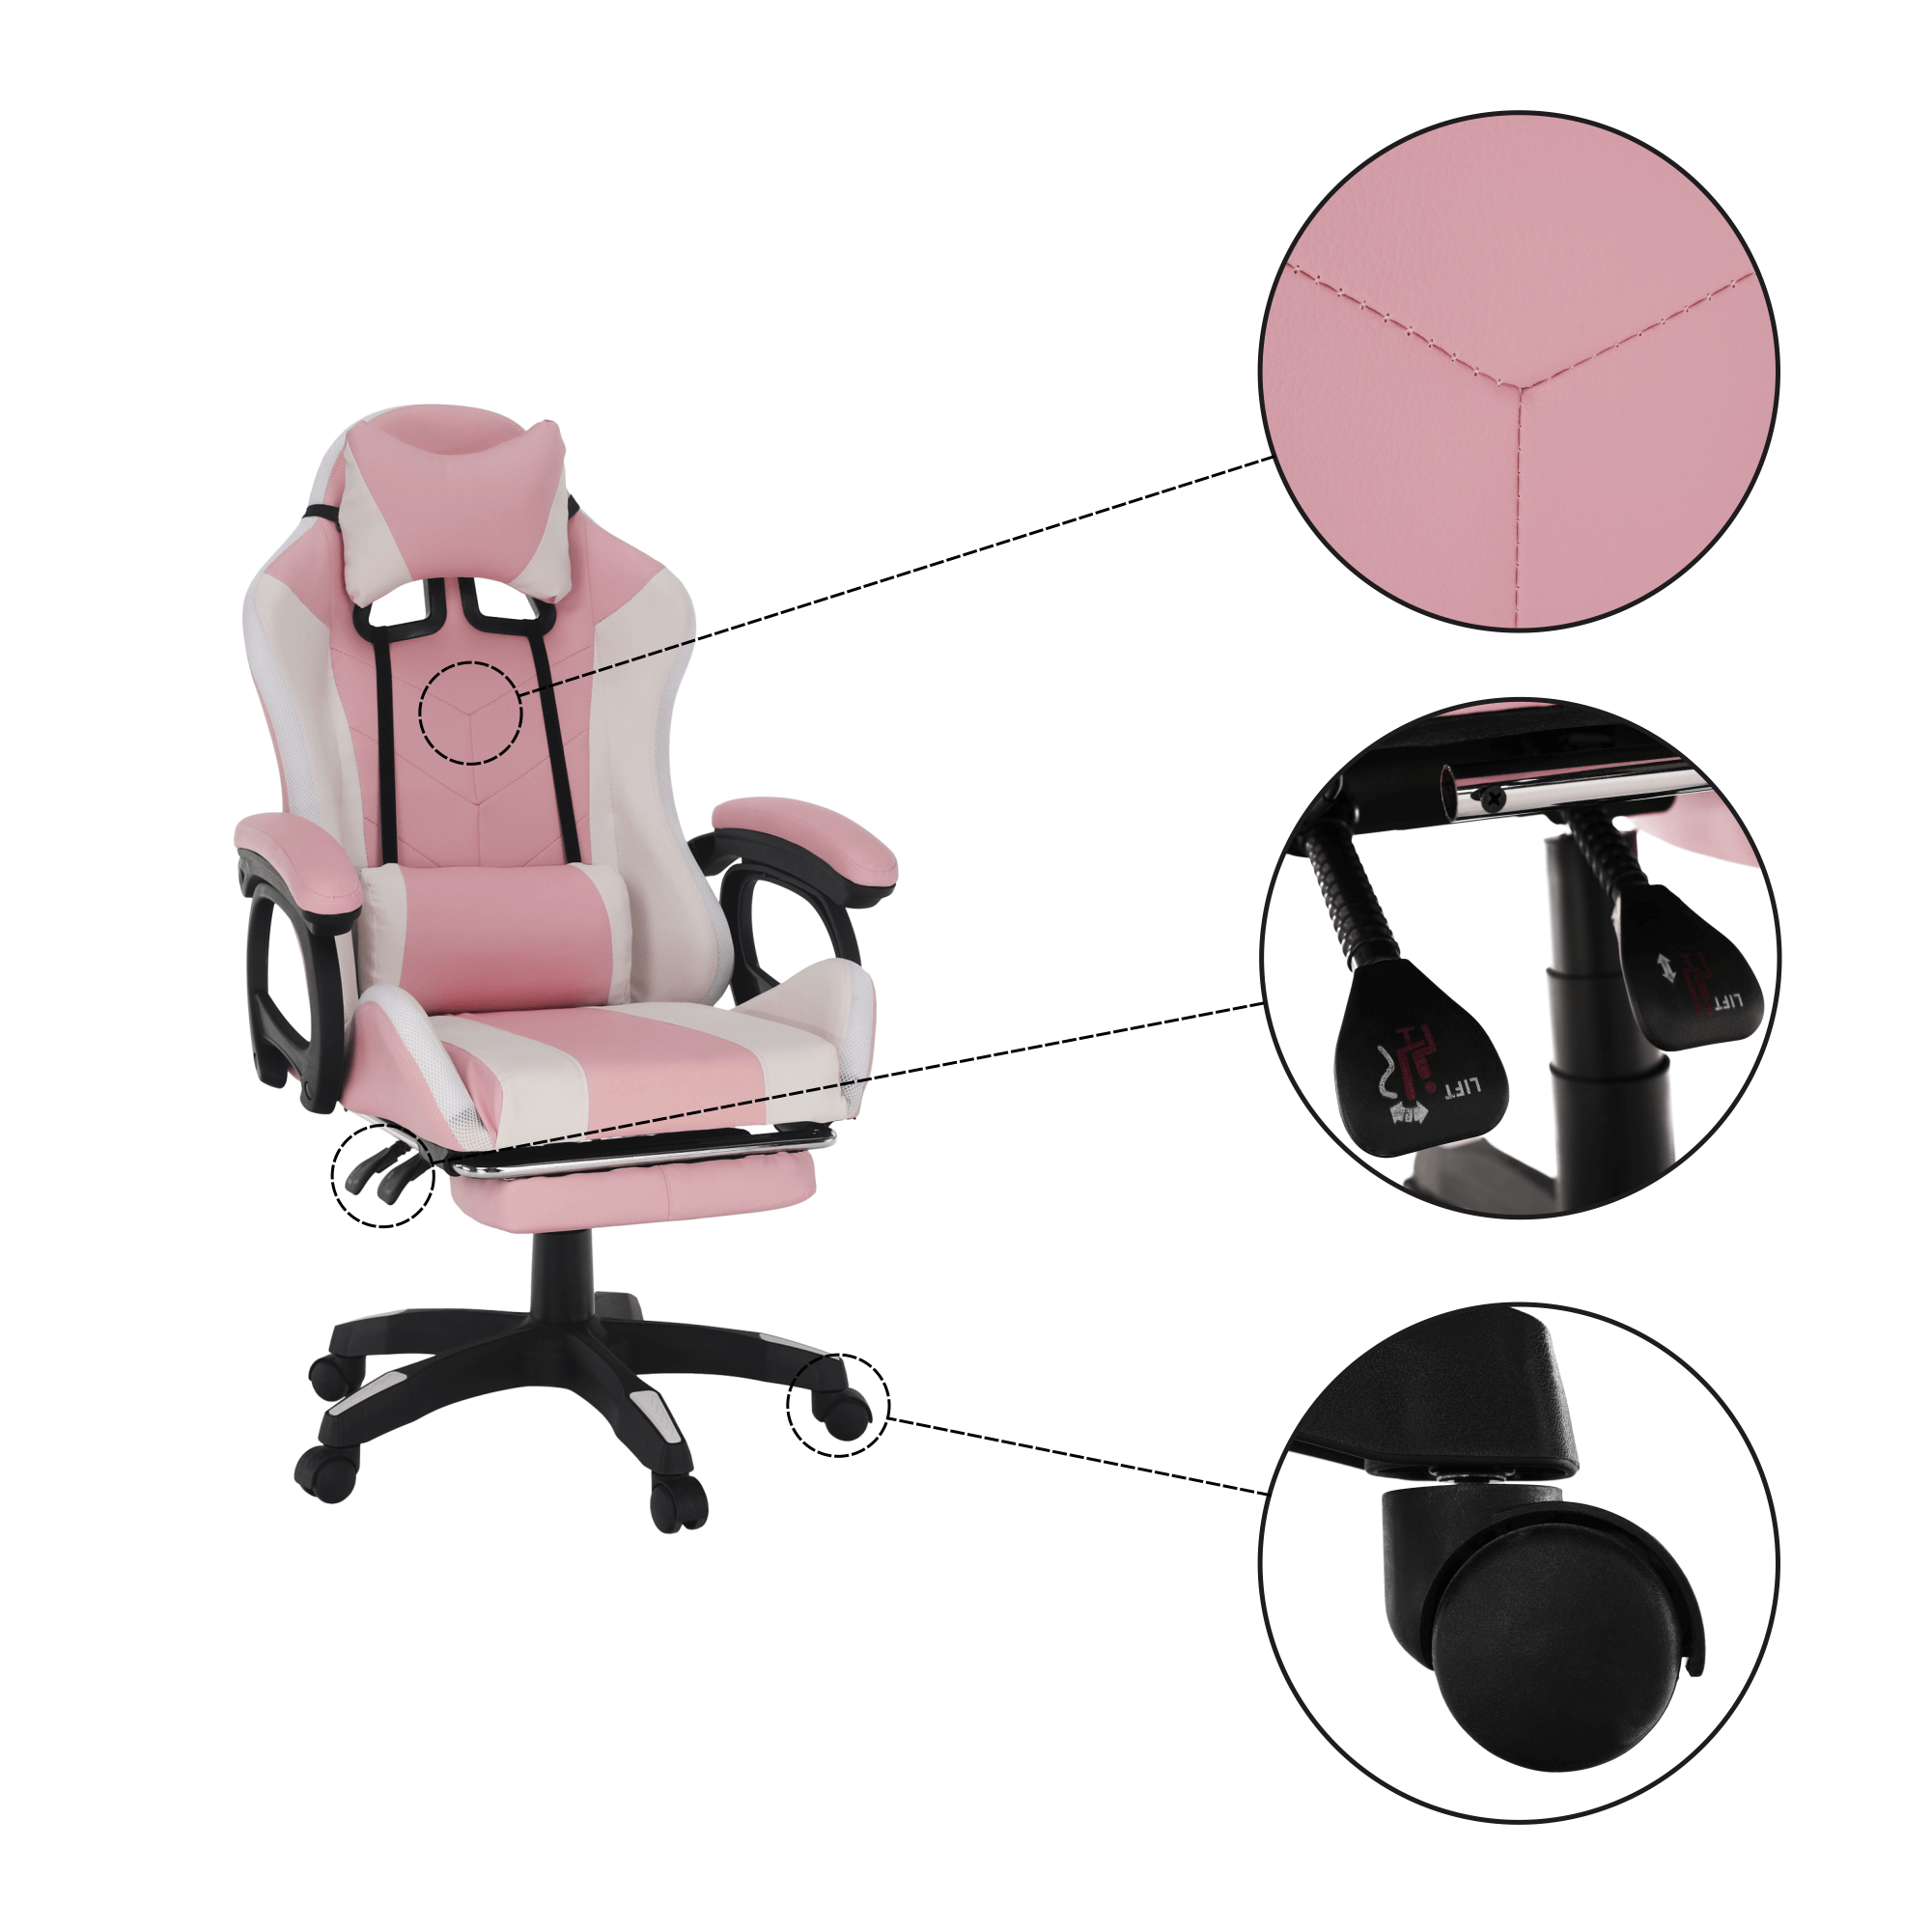 Scaun de birou / joc cu iluminare LED RGB, roz / alb, JOVELA